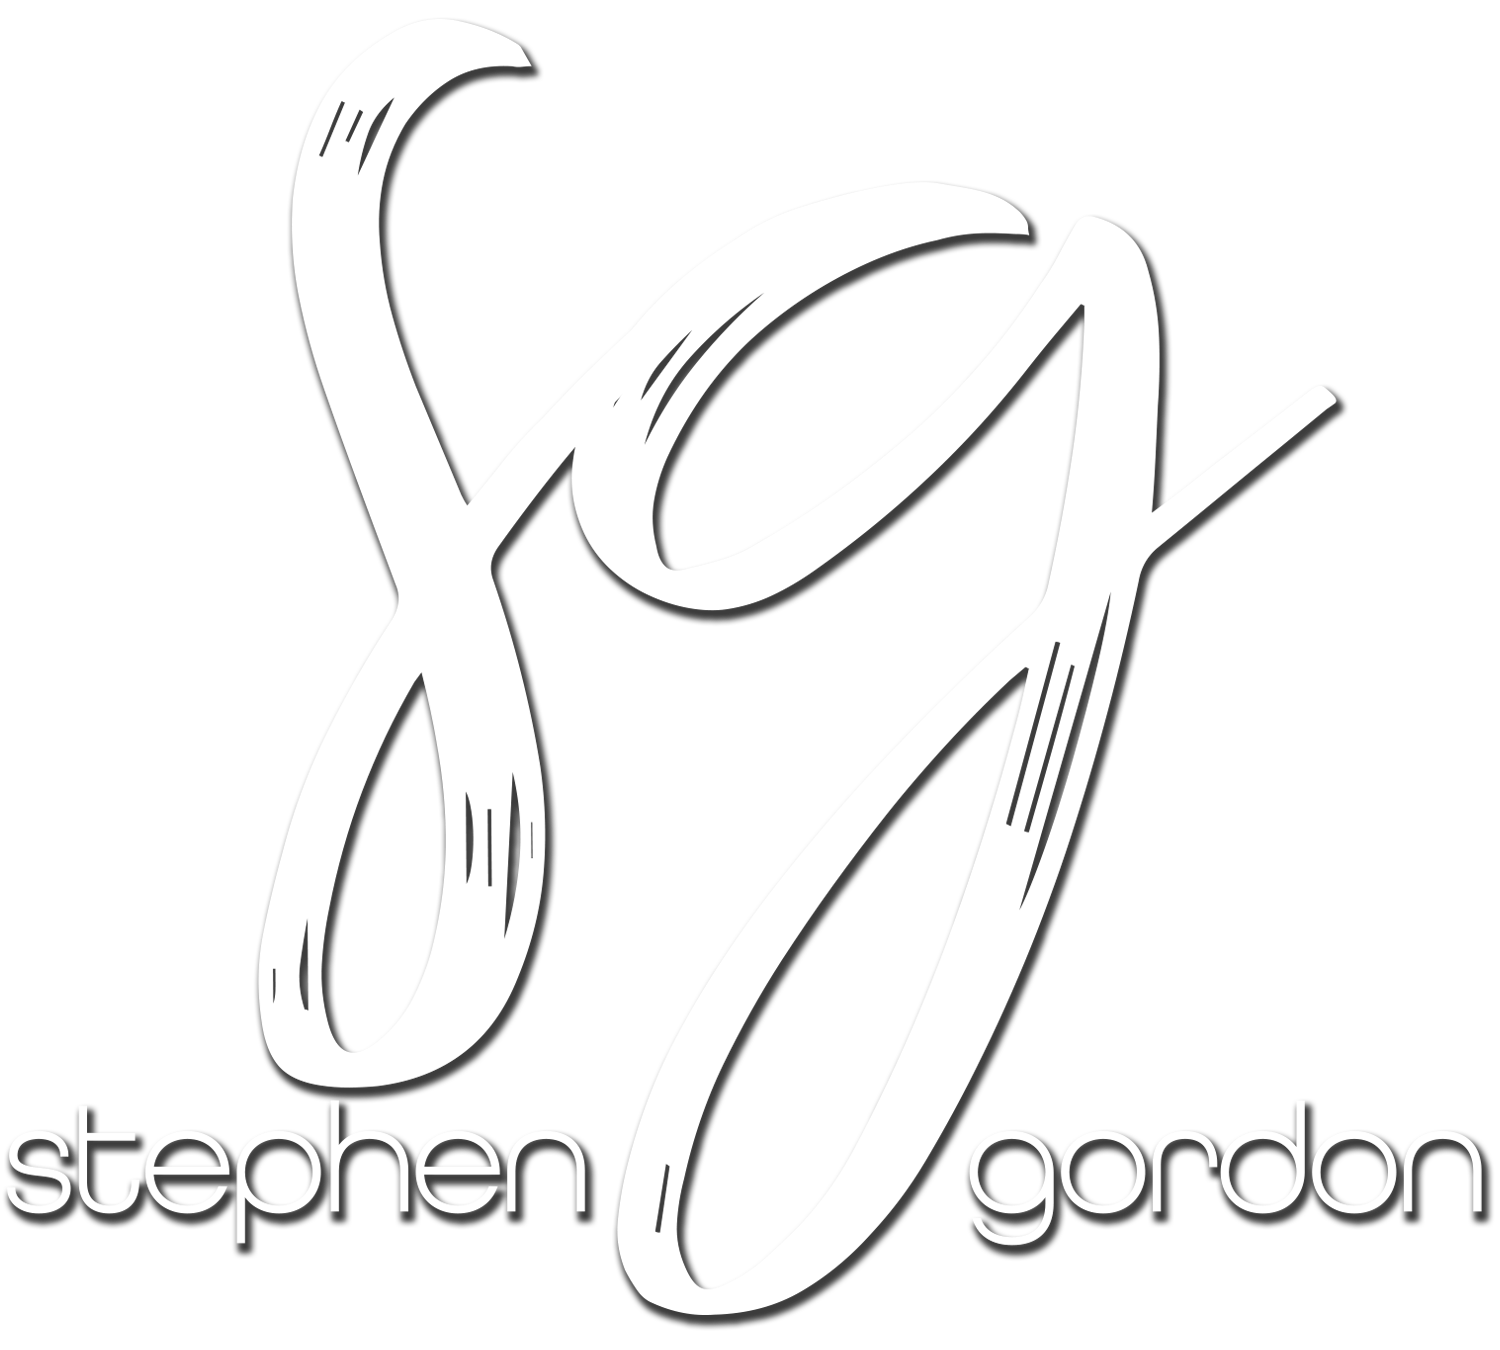 Stephen Gordon